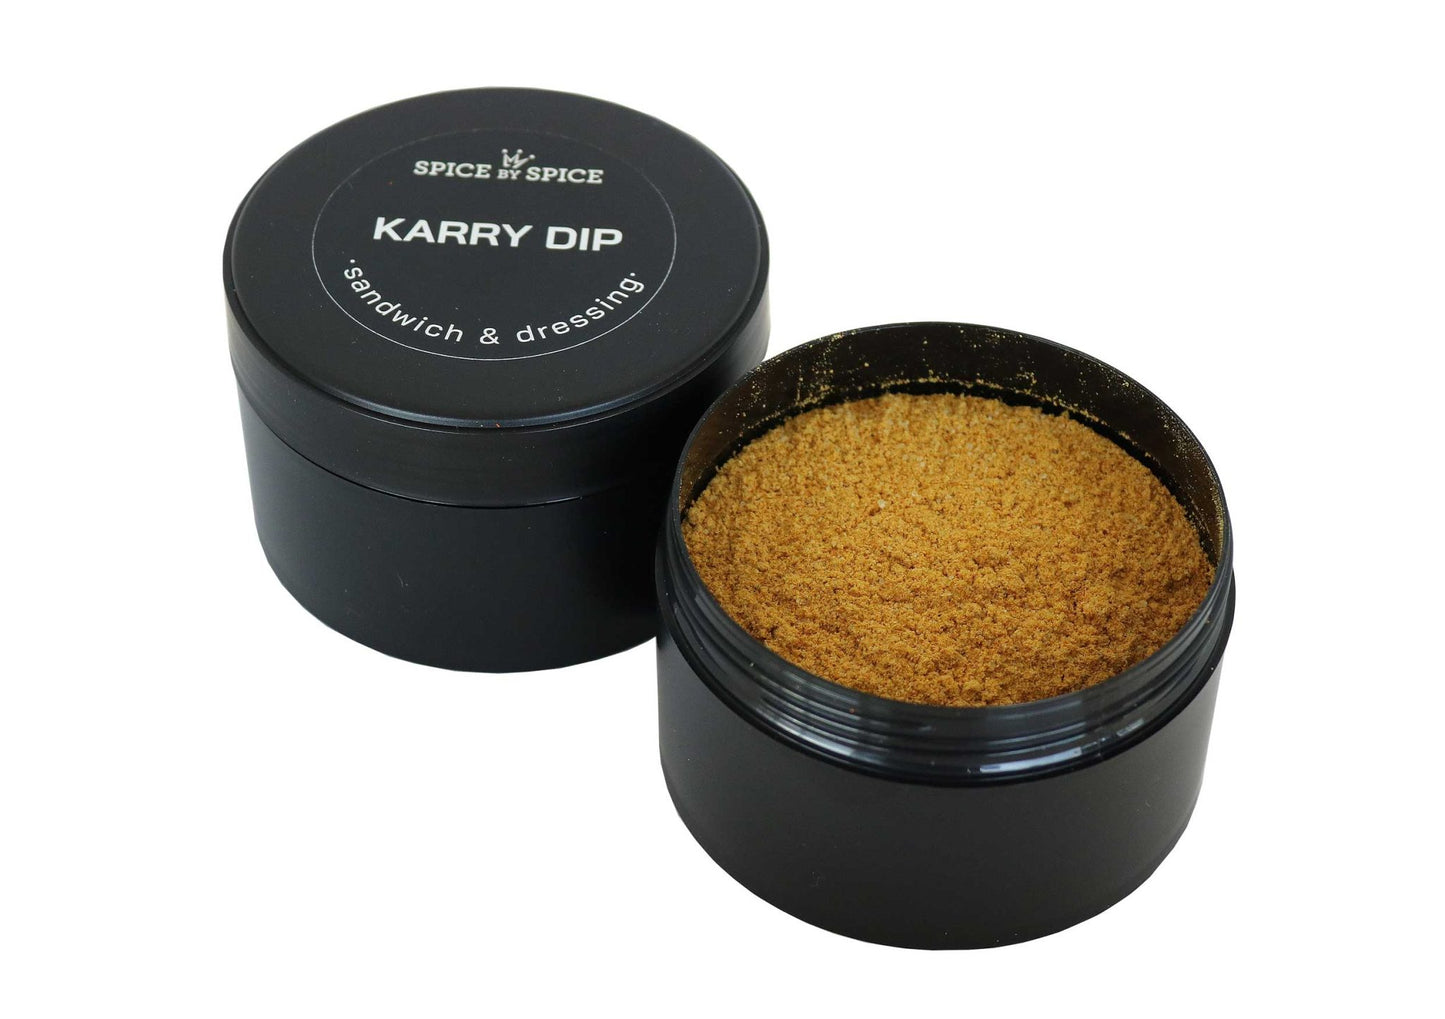 Spice By Spice - Karry Dip